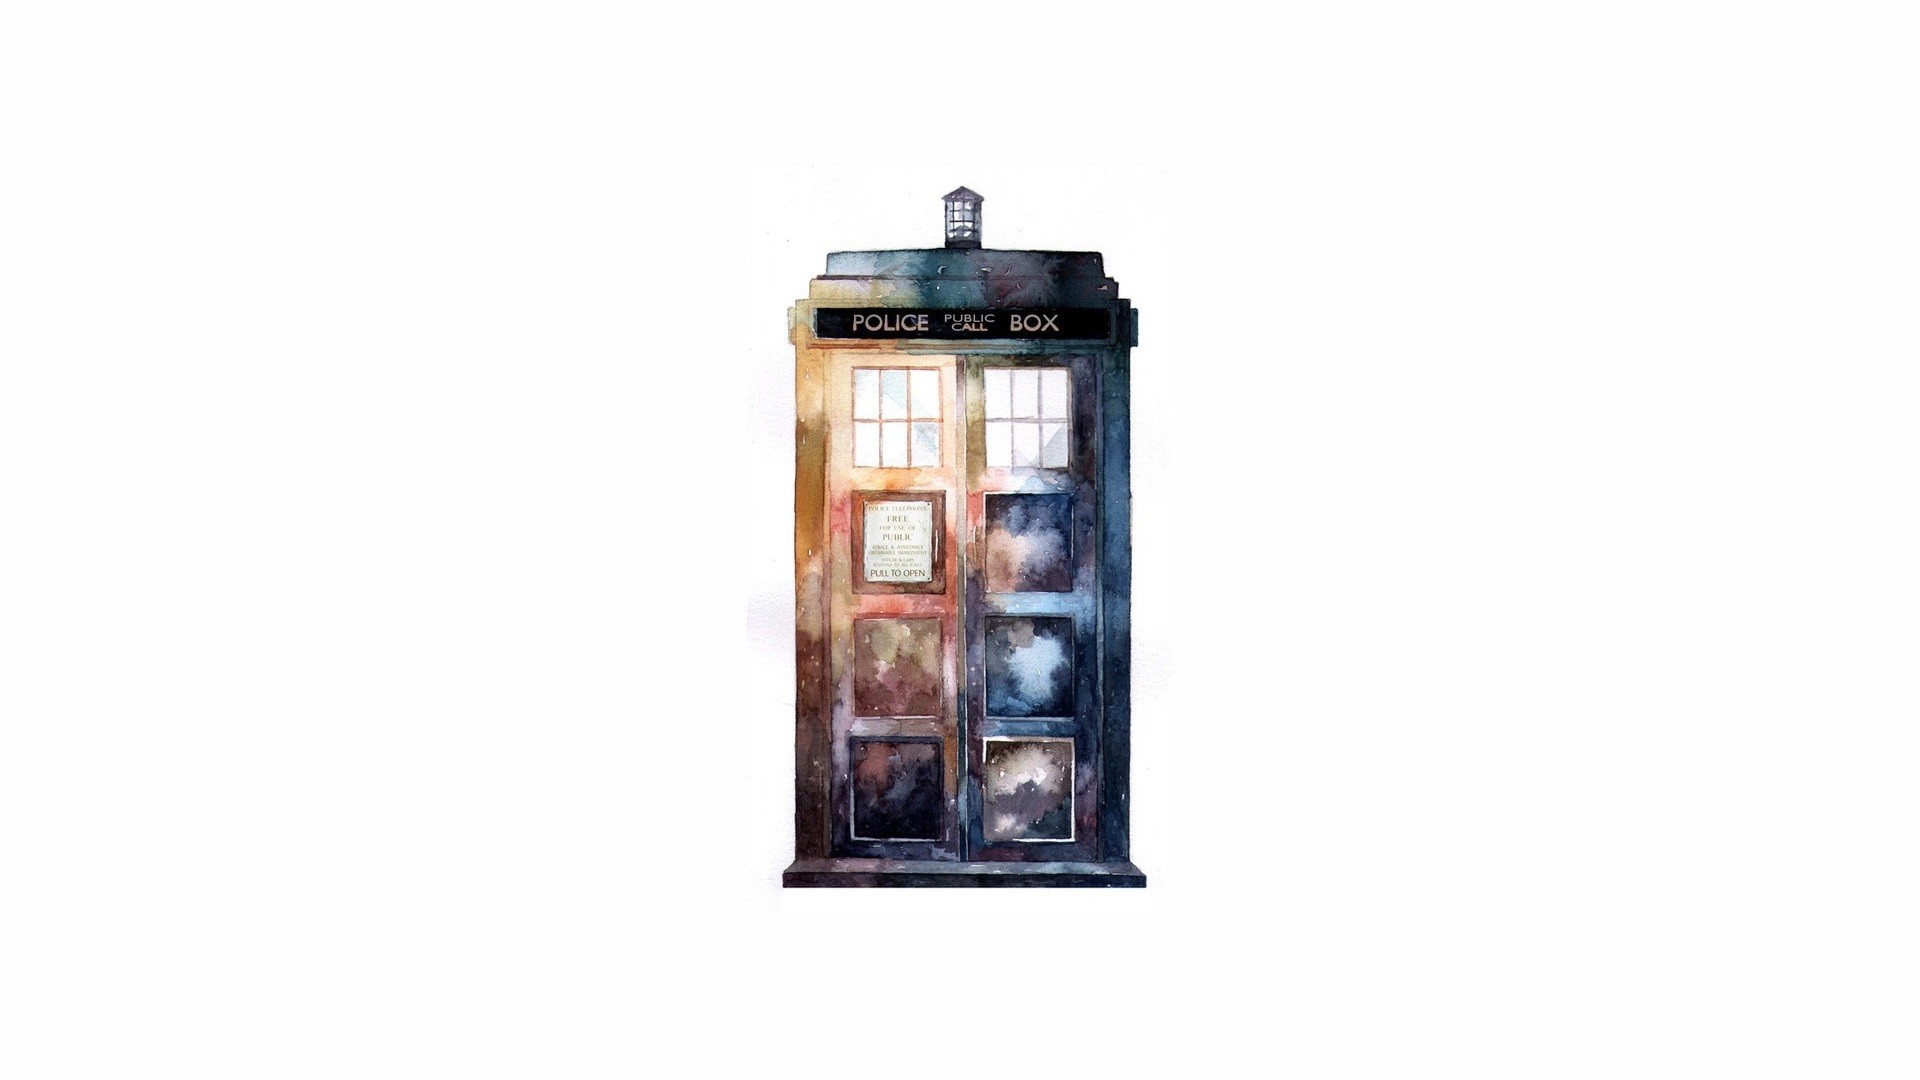 Doctor Who The Doctor TARDiS Christopher Eccleston David Tennant Matt Smith Peter Capaldi 1920x1080